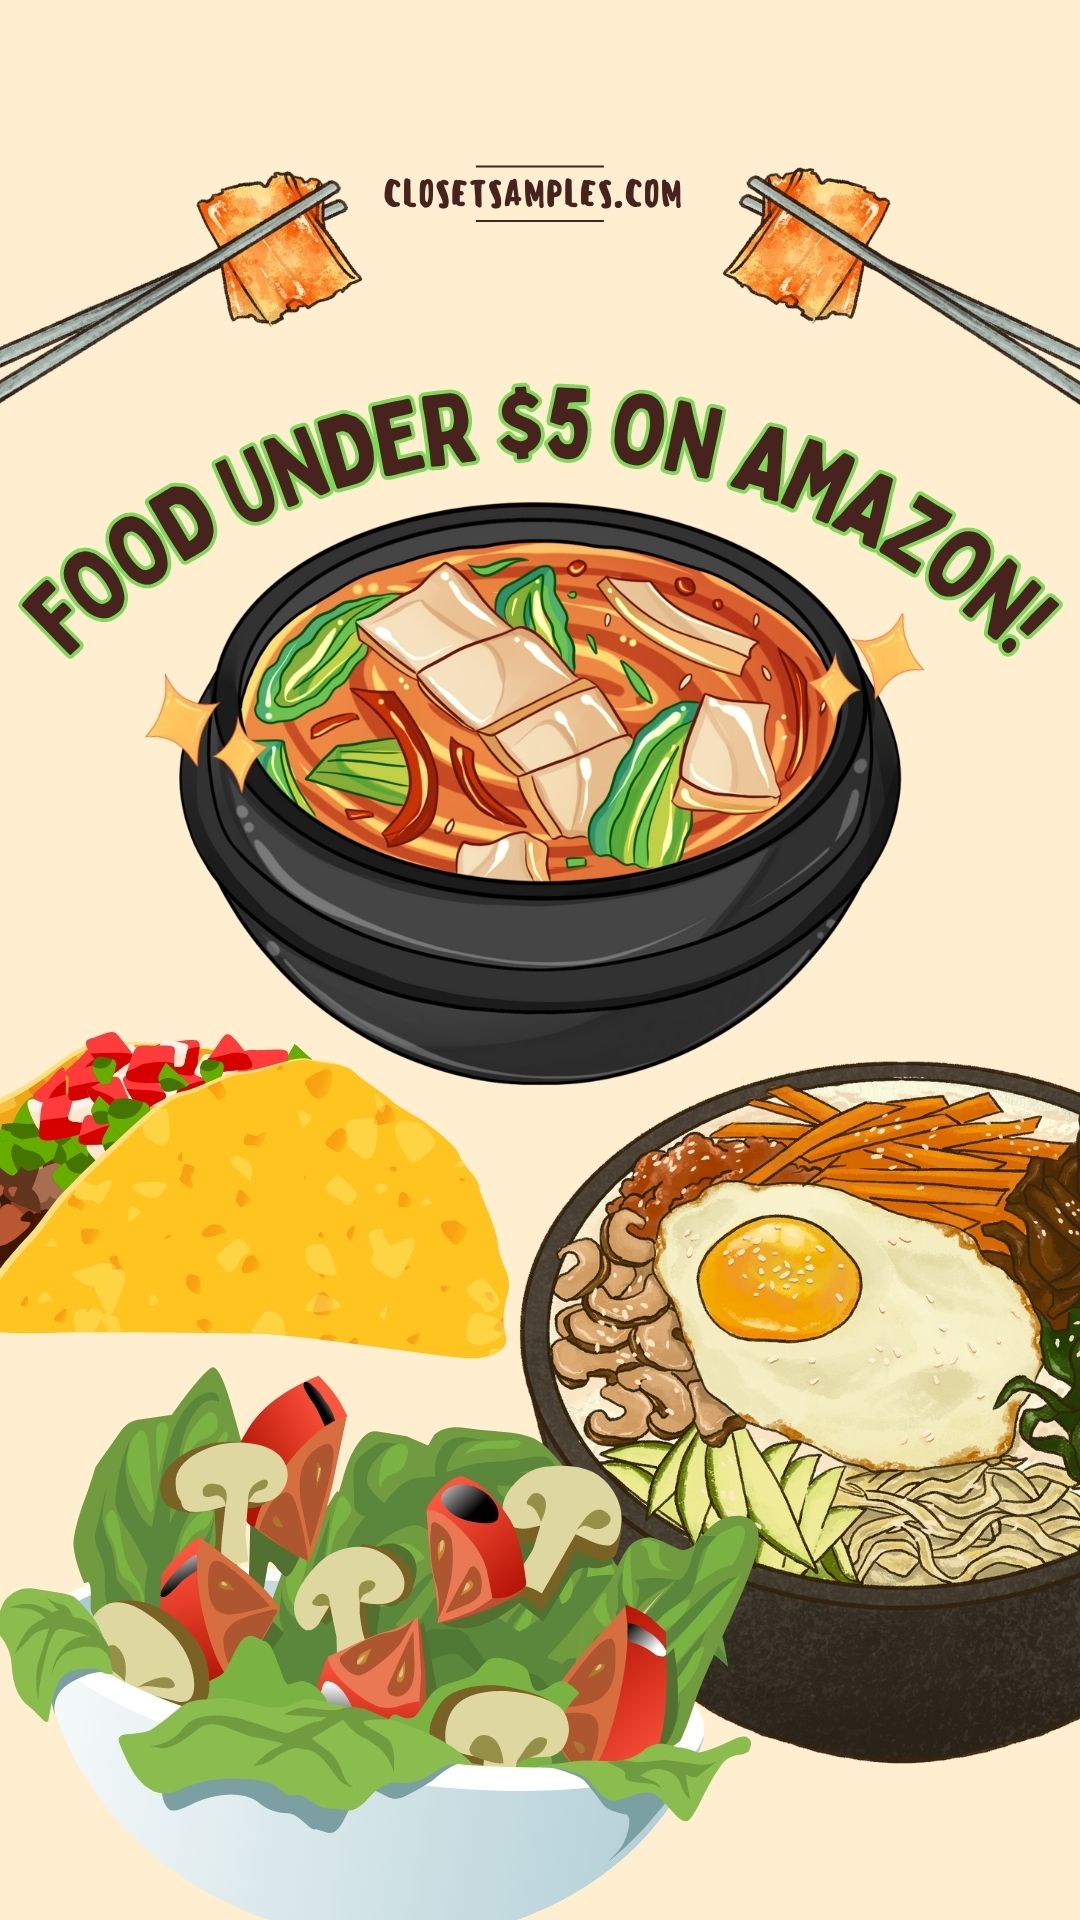 Food Under 5 on Amazon closetsamples Pinterest